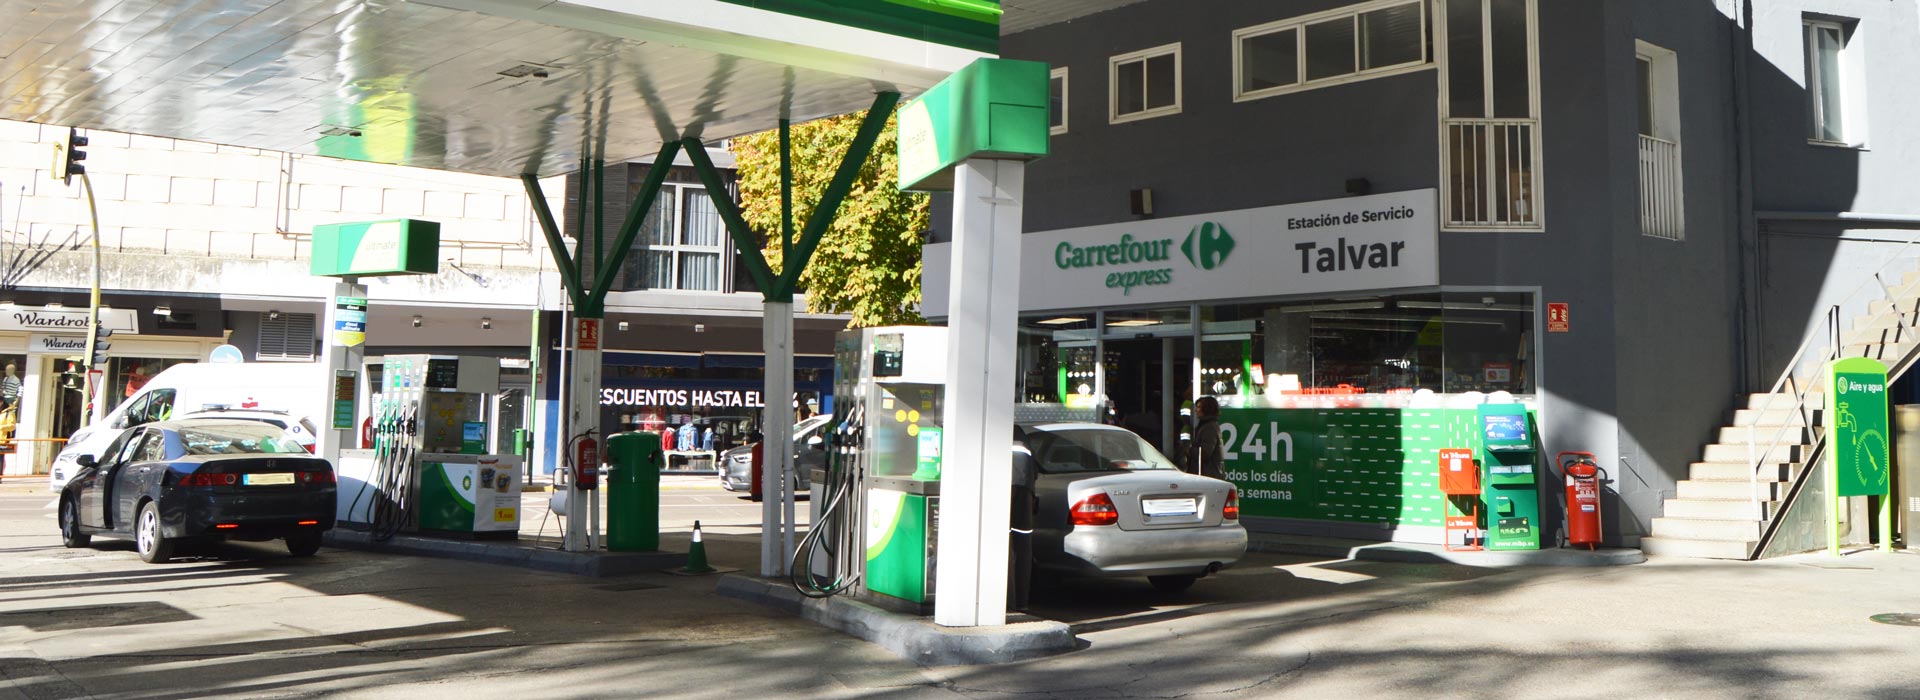 gasolinera bp talavera carrefour express 3